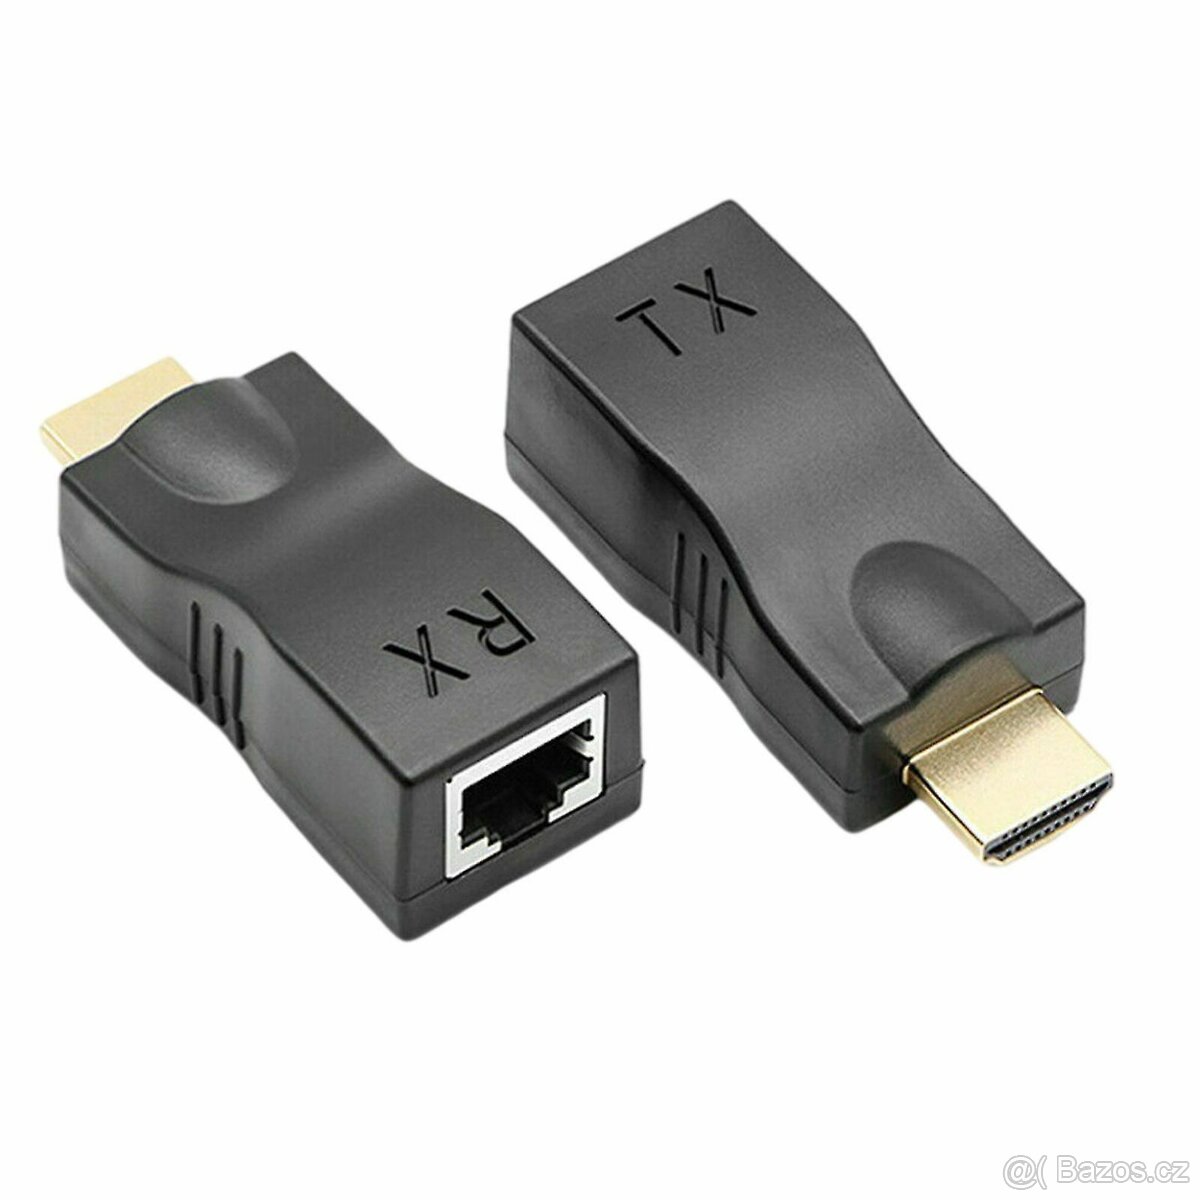 HDMI extender po LAN RJ45 cat 5e/6  do 30m